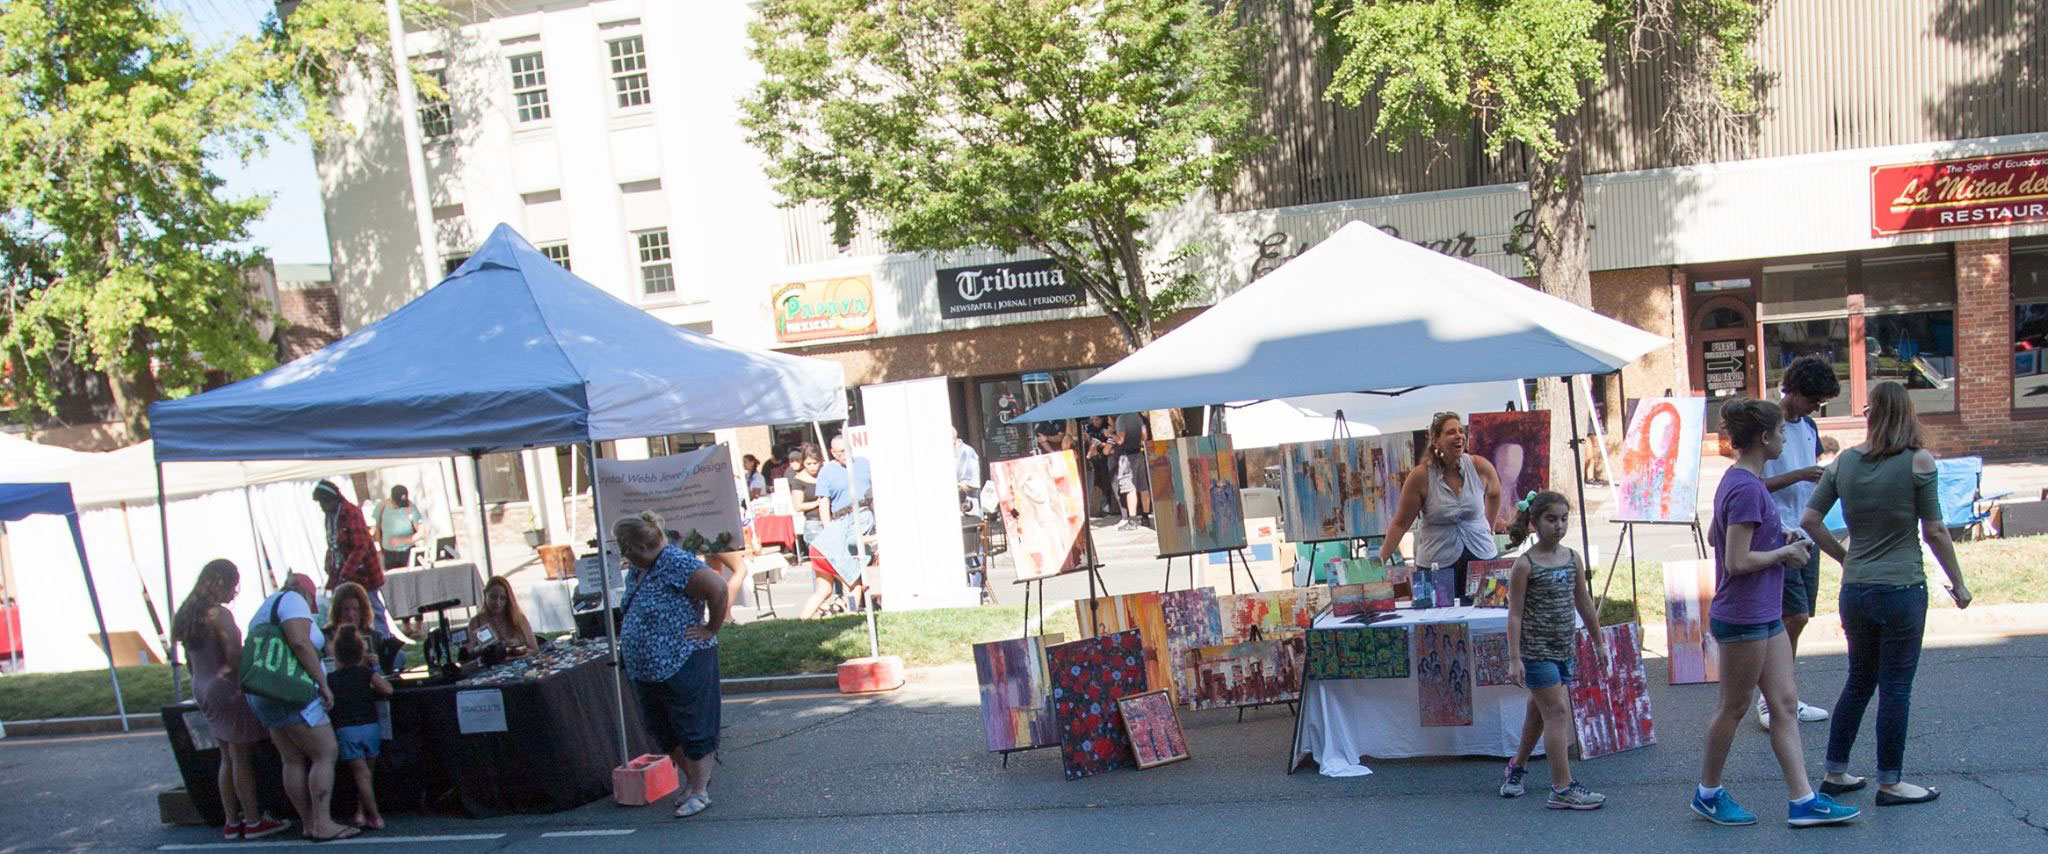 CityCenter Danbury Artists & Artisans Street Festival